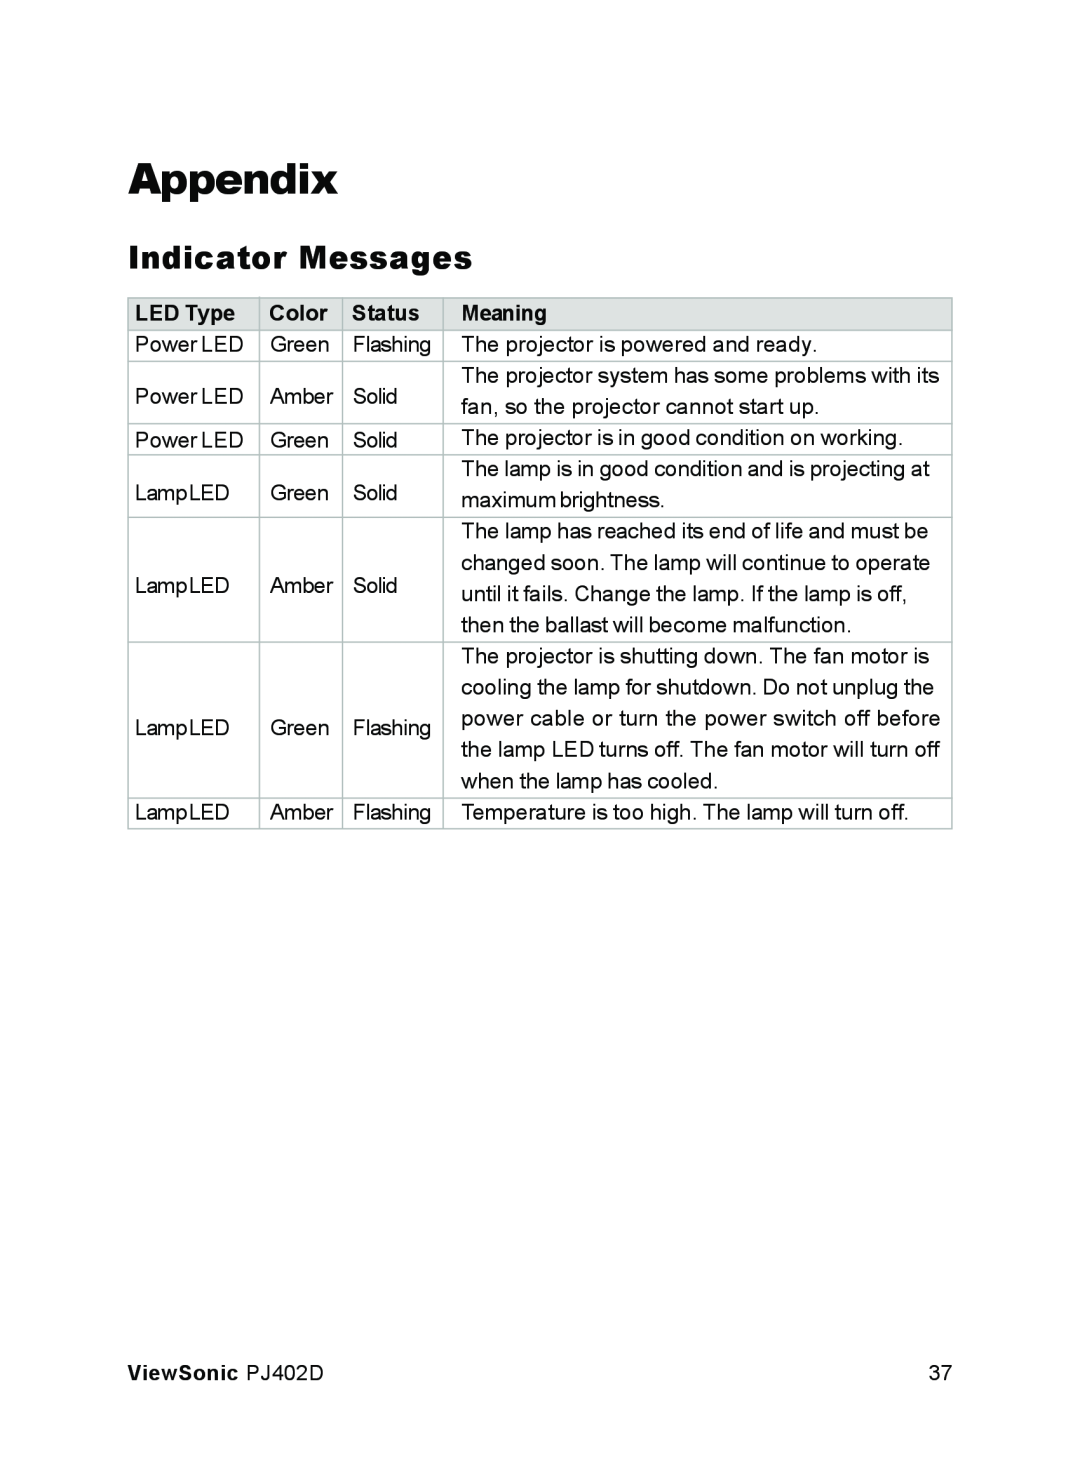 ViewSonic PJ402D manual Appendix, Indicator Messages 